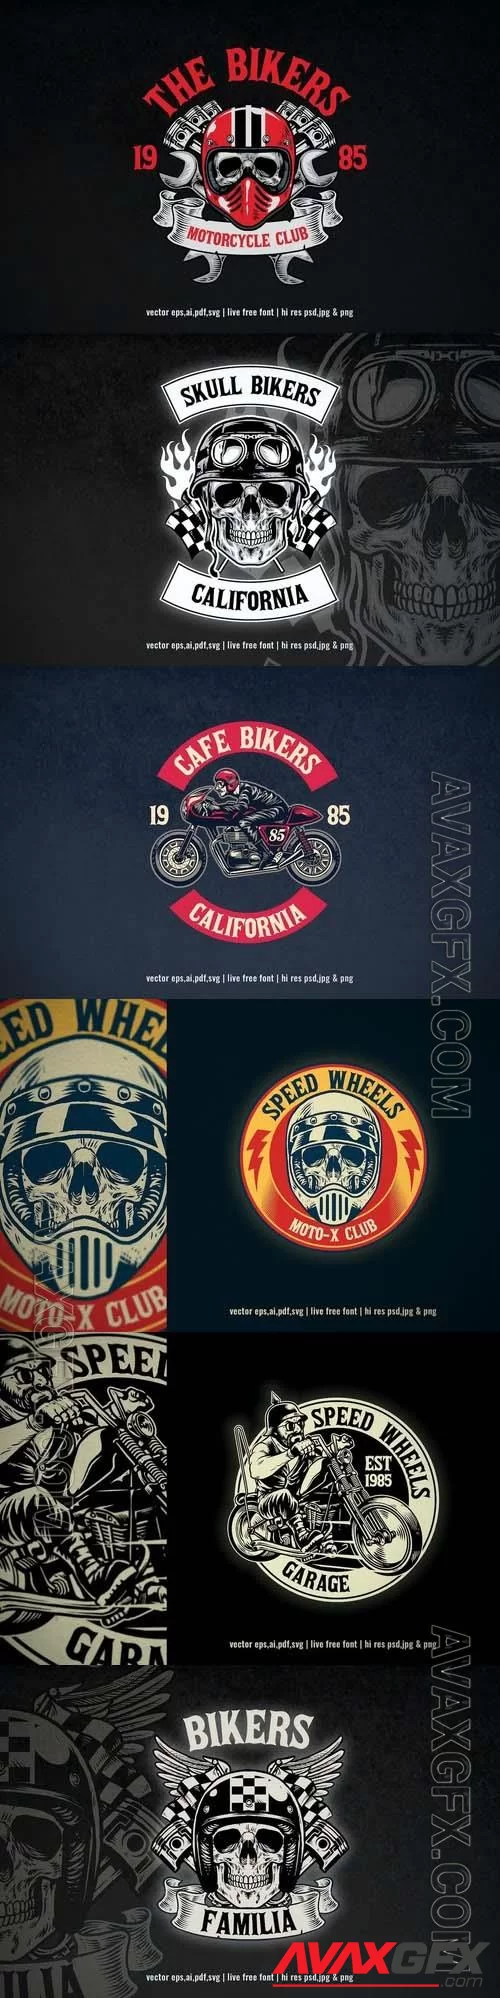 Motorcycle club logo